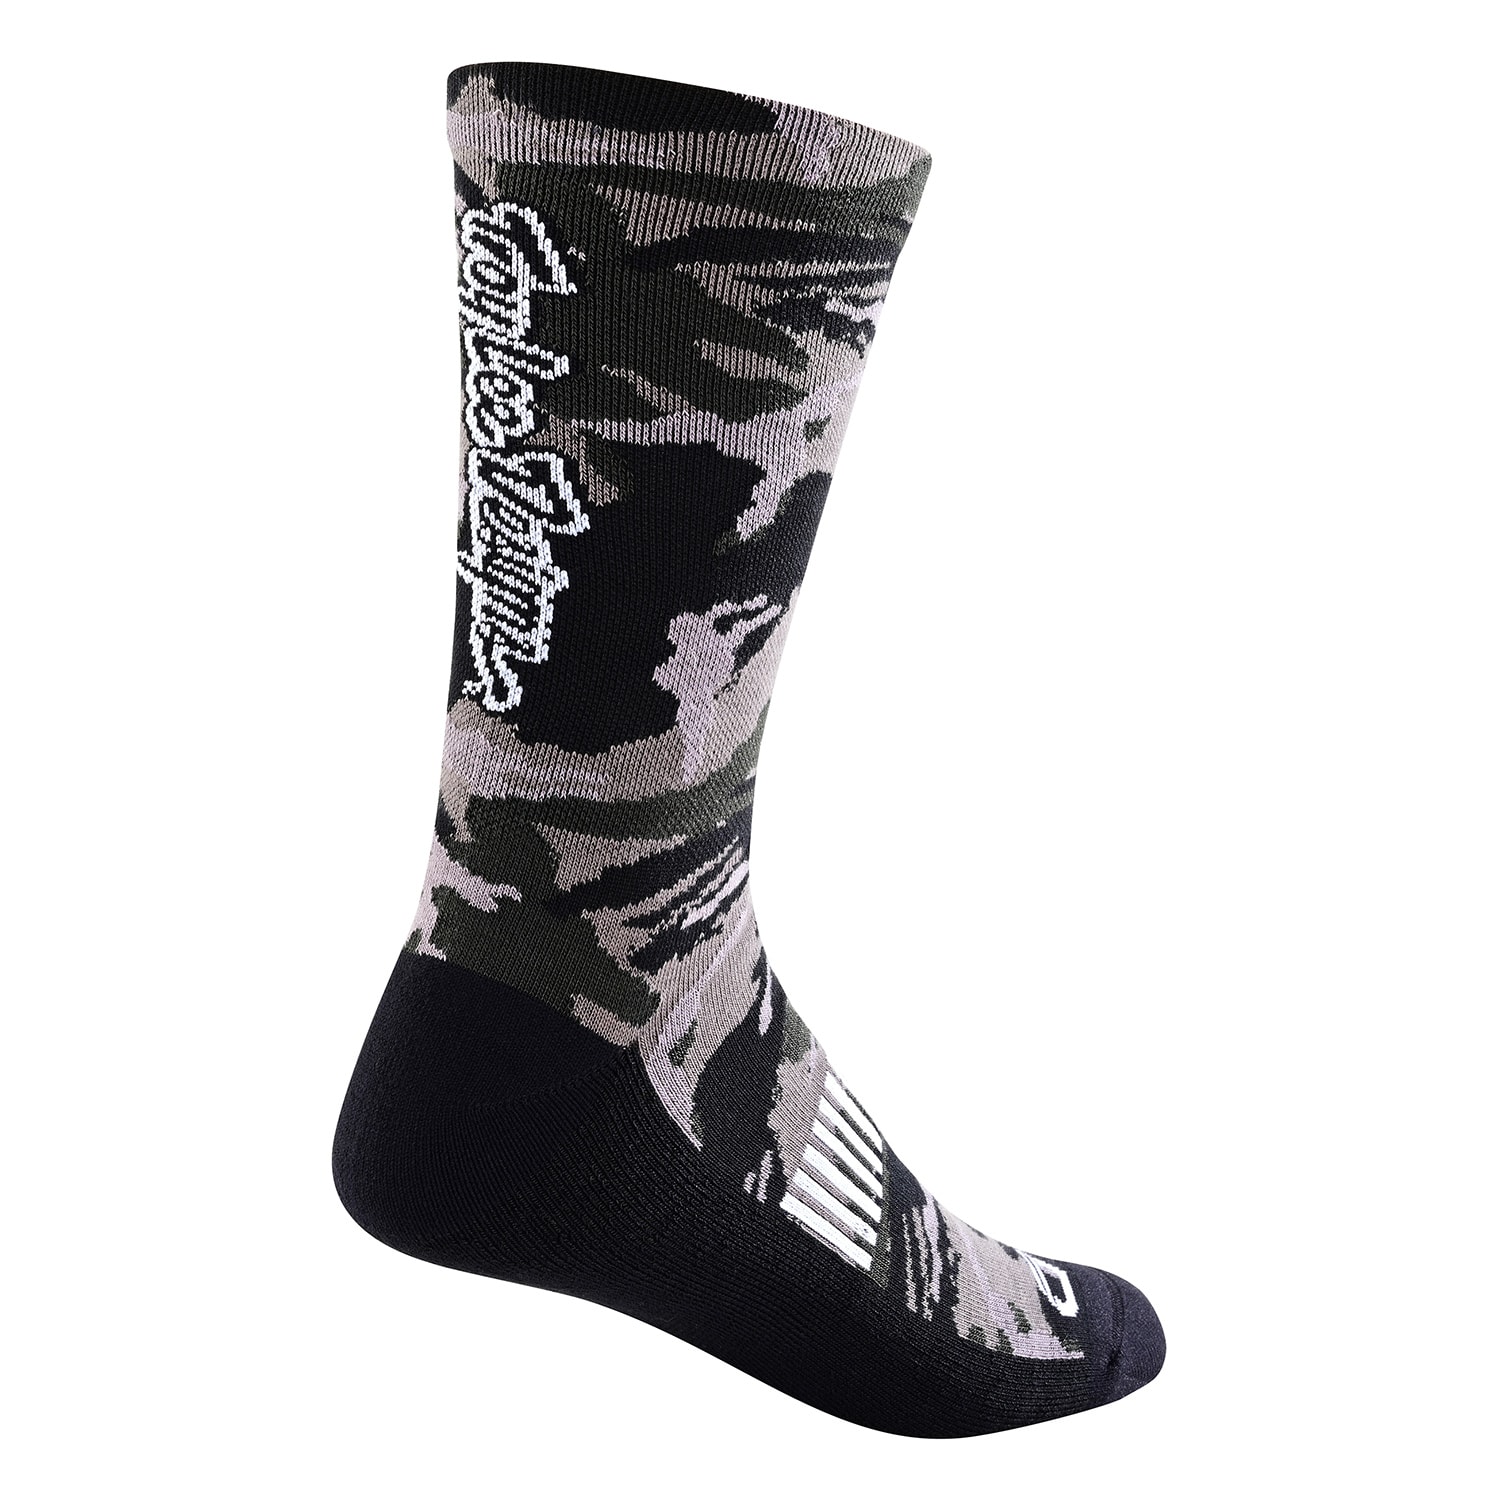 Troy Lee Designs Performance Sock Camo Signature black L/XL (9-13) 23